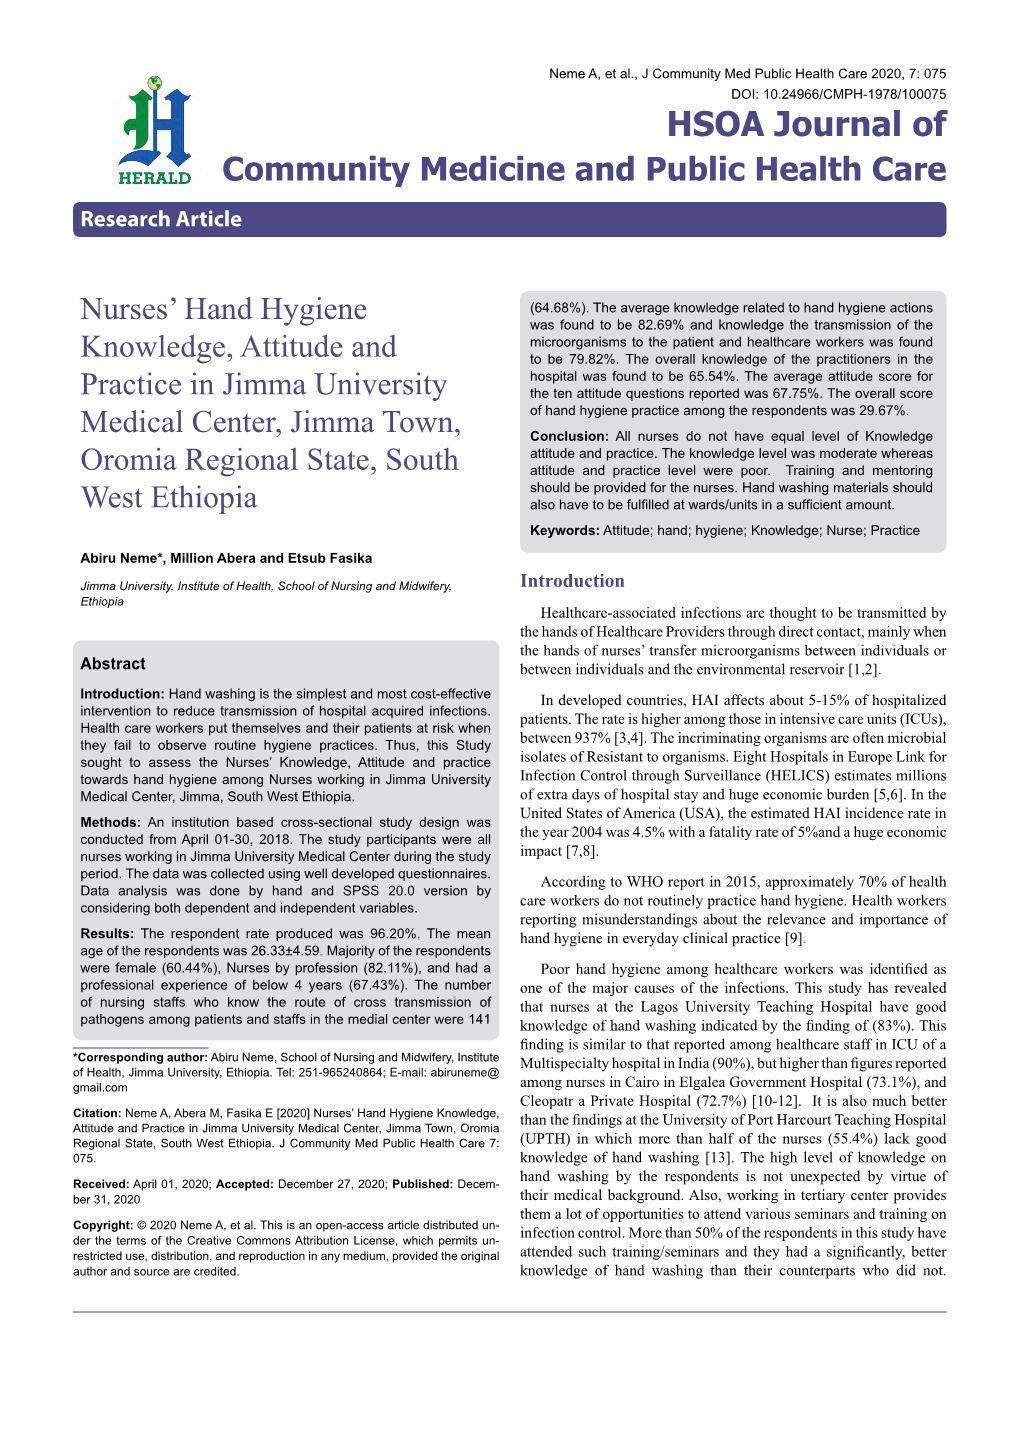 Nurses' Hand Hygiene Knowledge, Attitude and Practice in Jimma